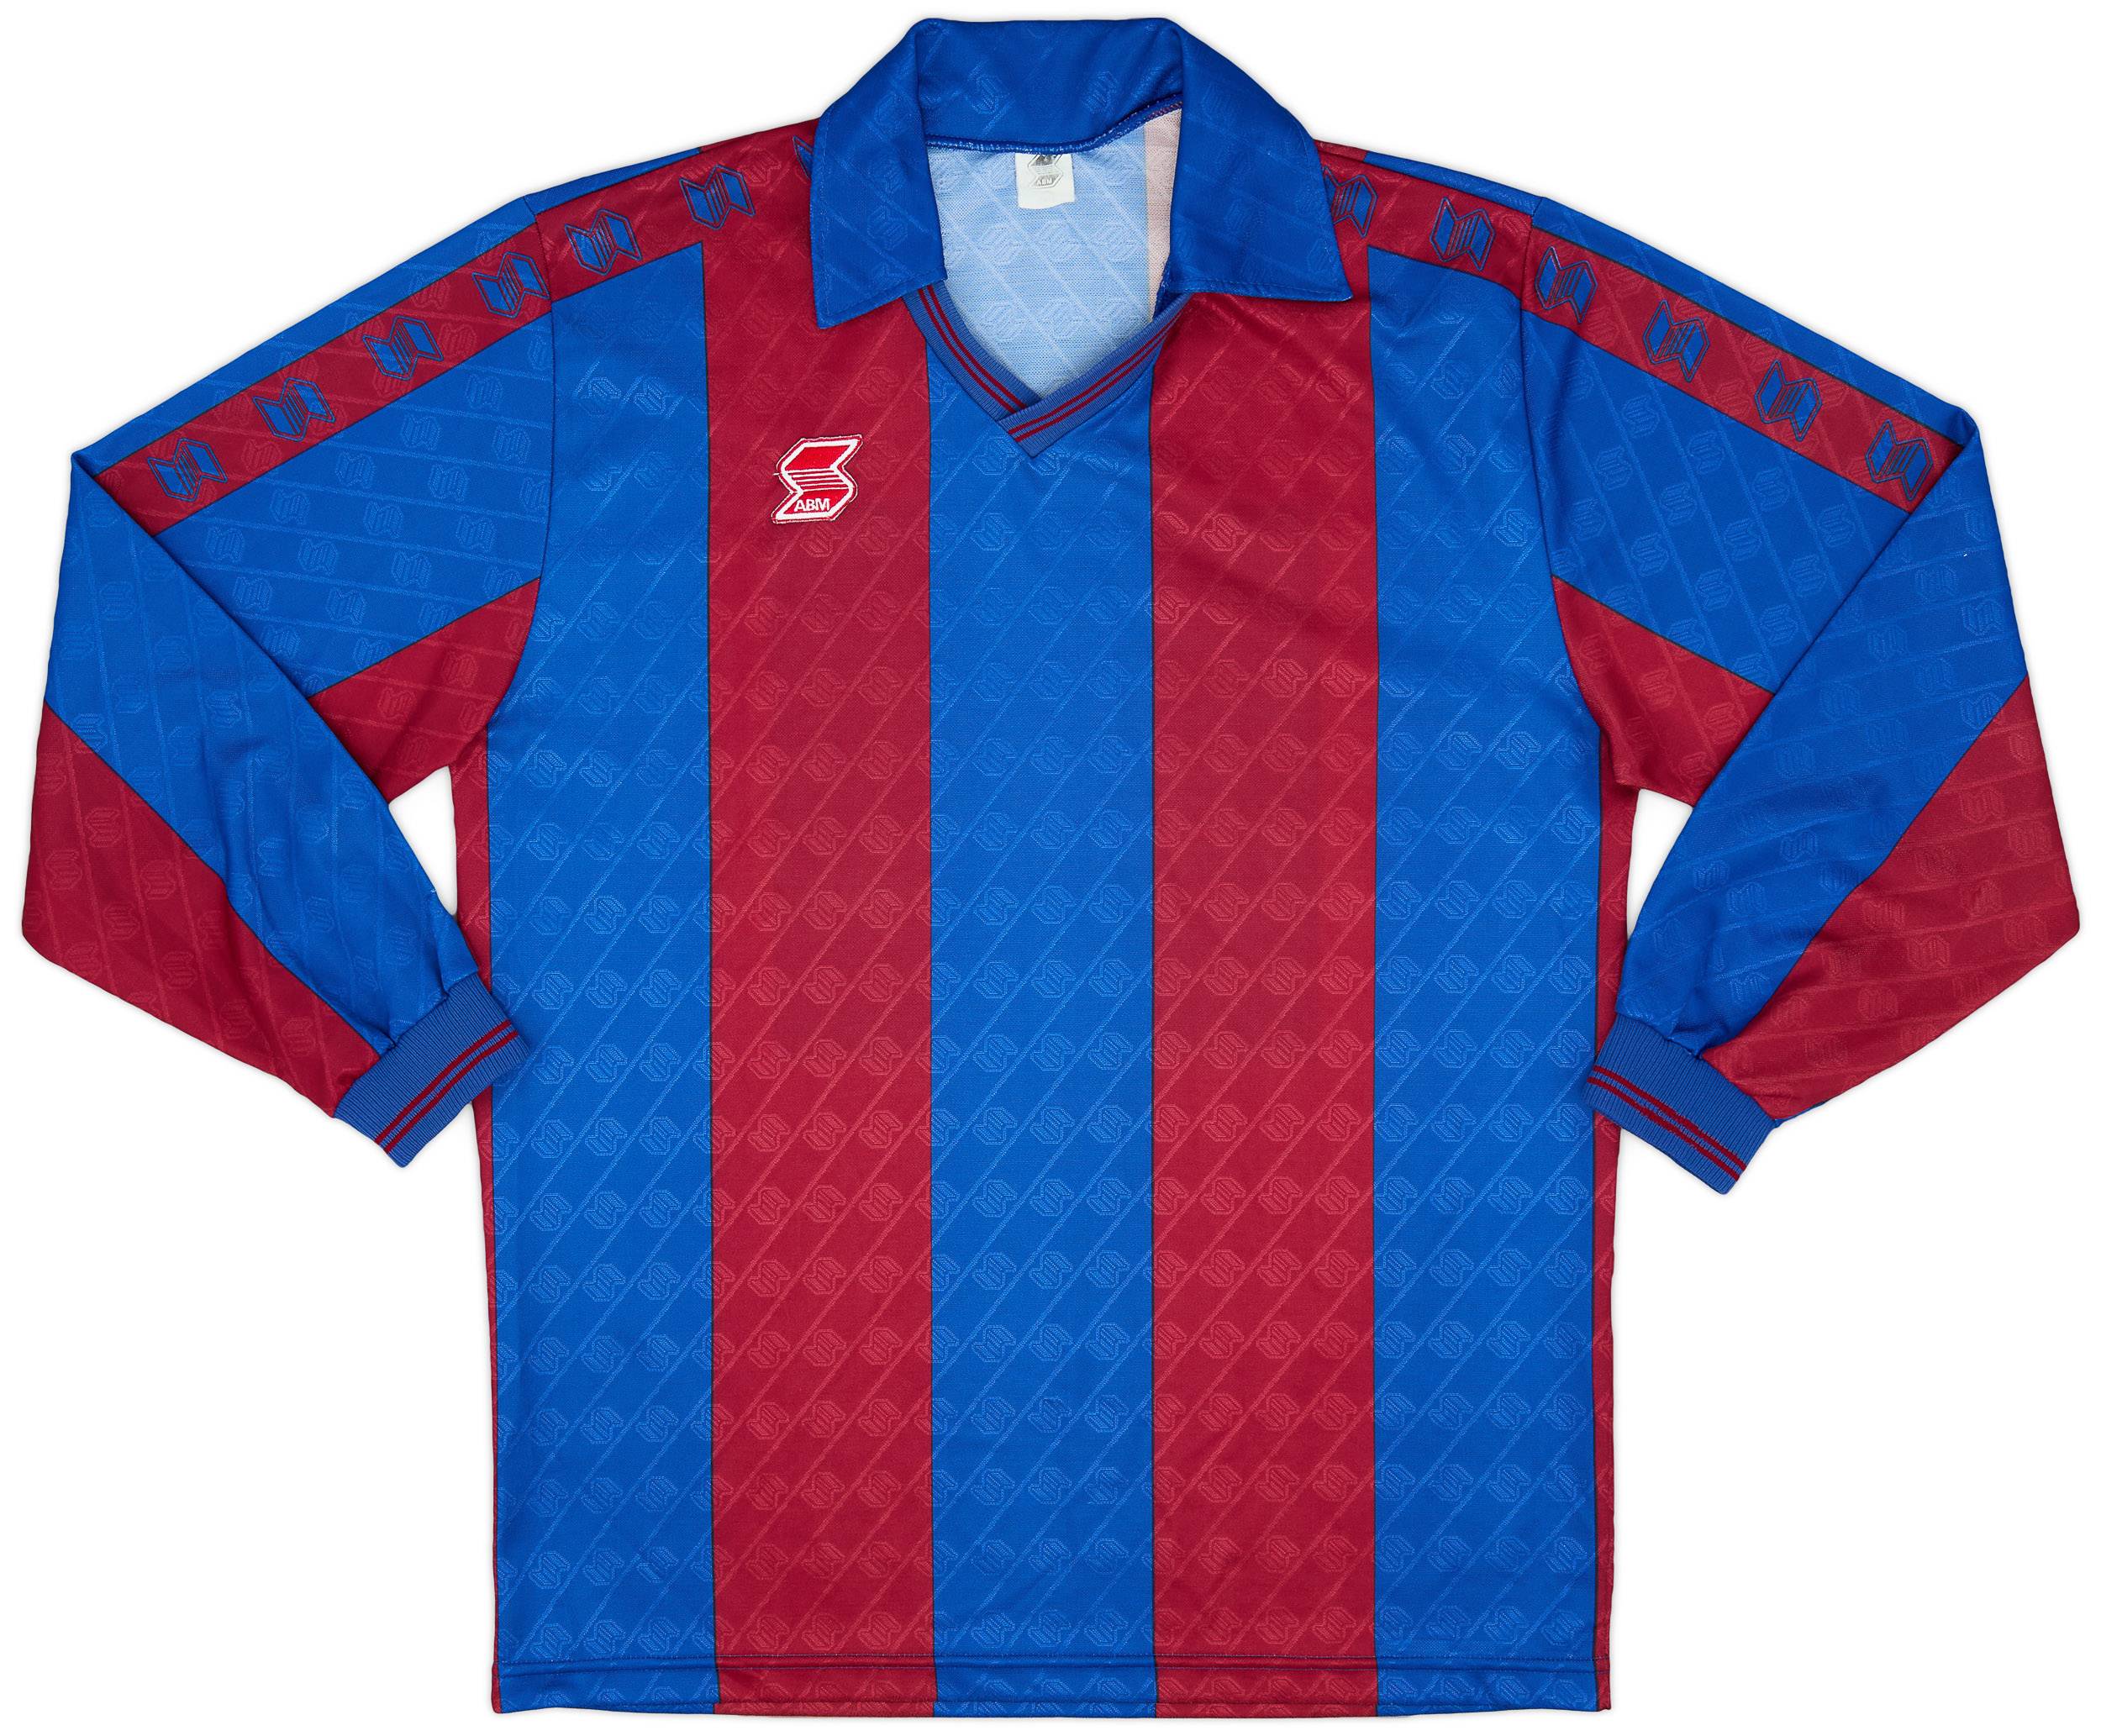 1992 ABM Template L/S Shirt (CSKA Moscow) - 9/10 - (XL)